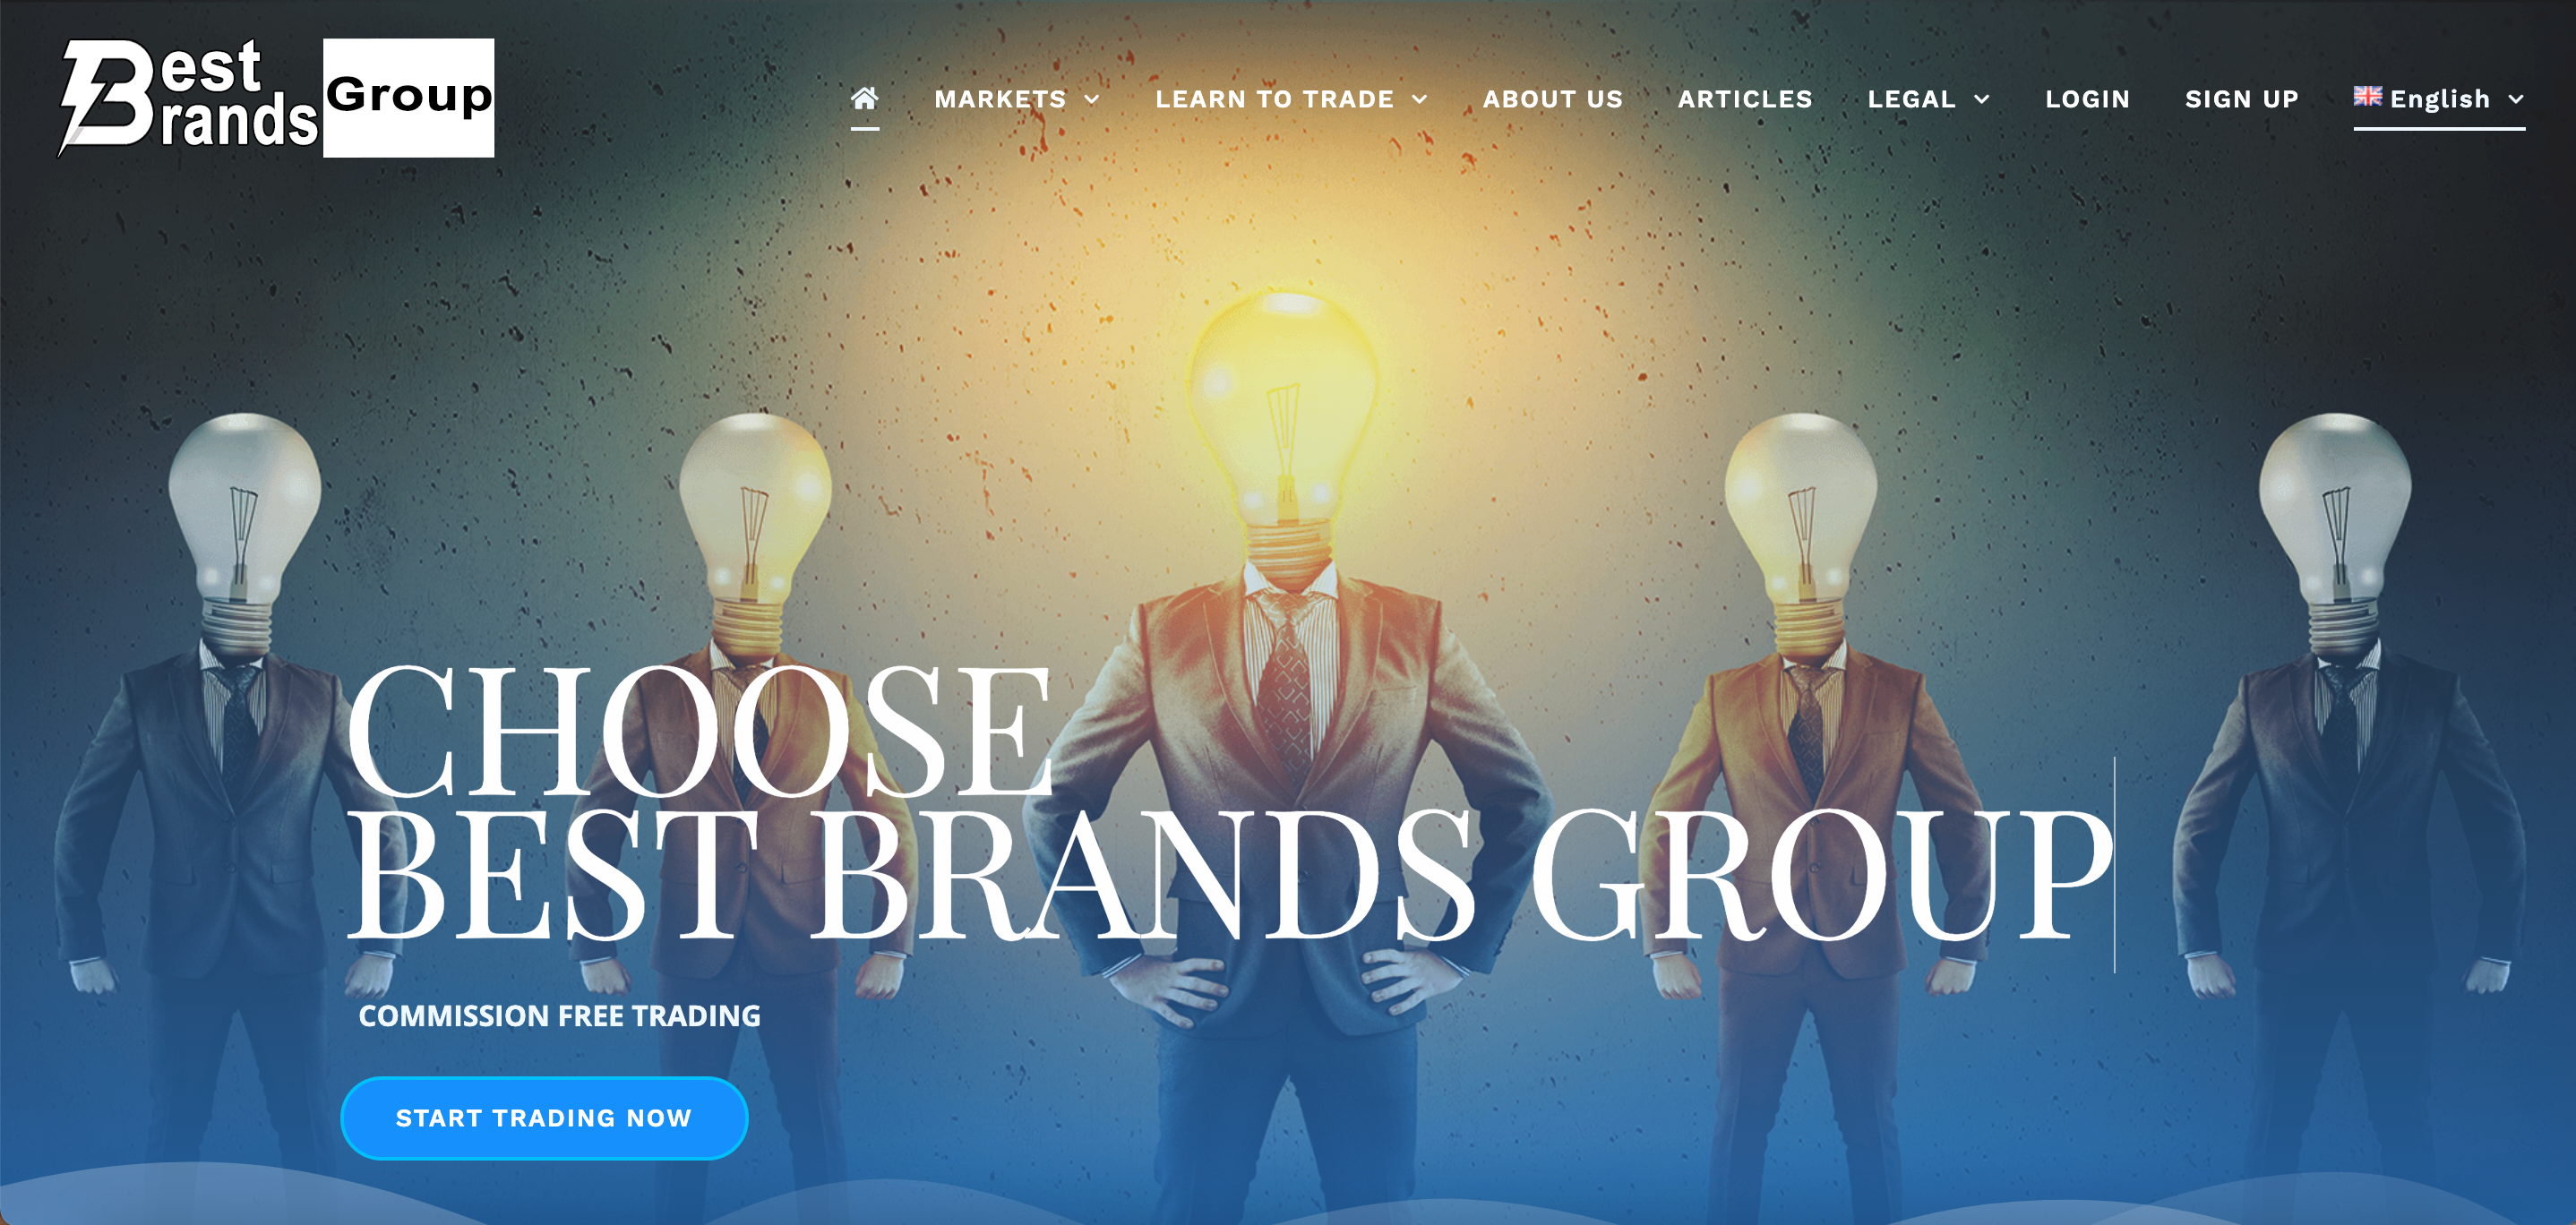 Best Brands Group website